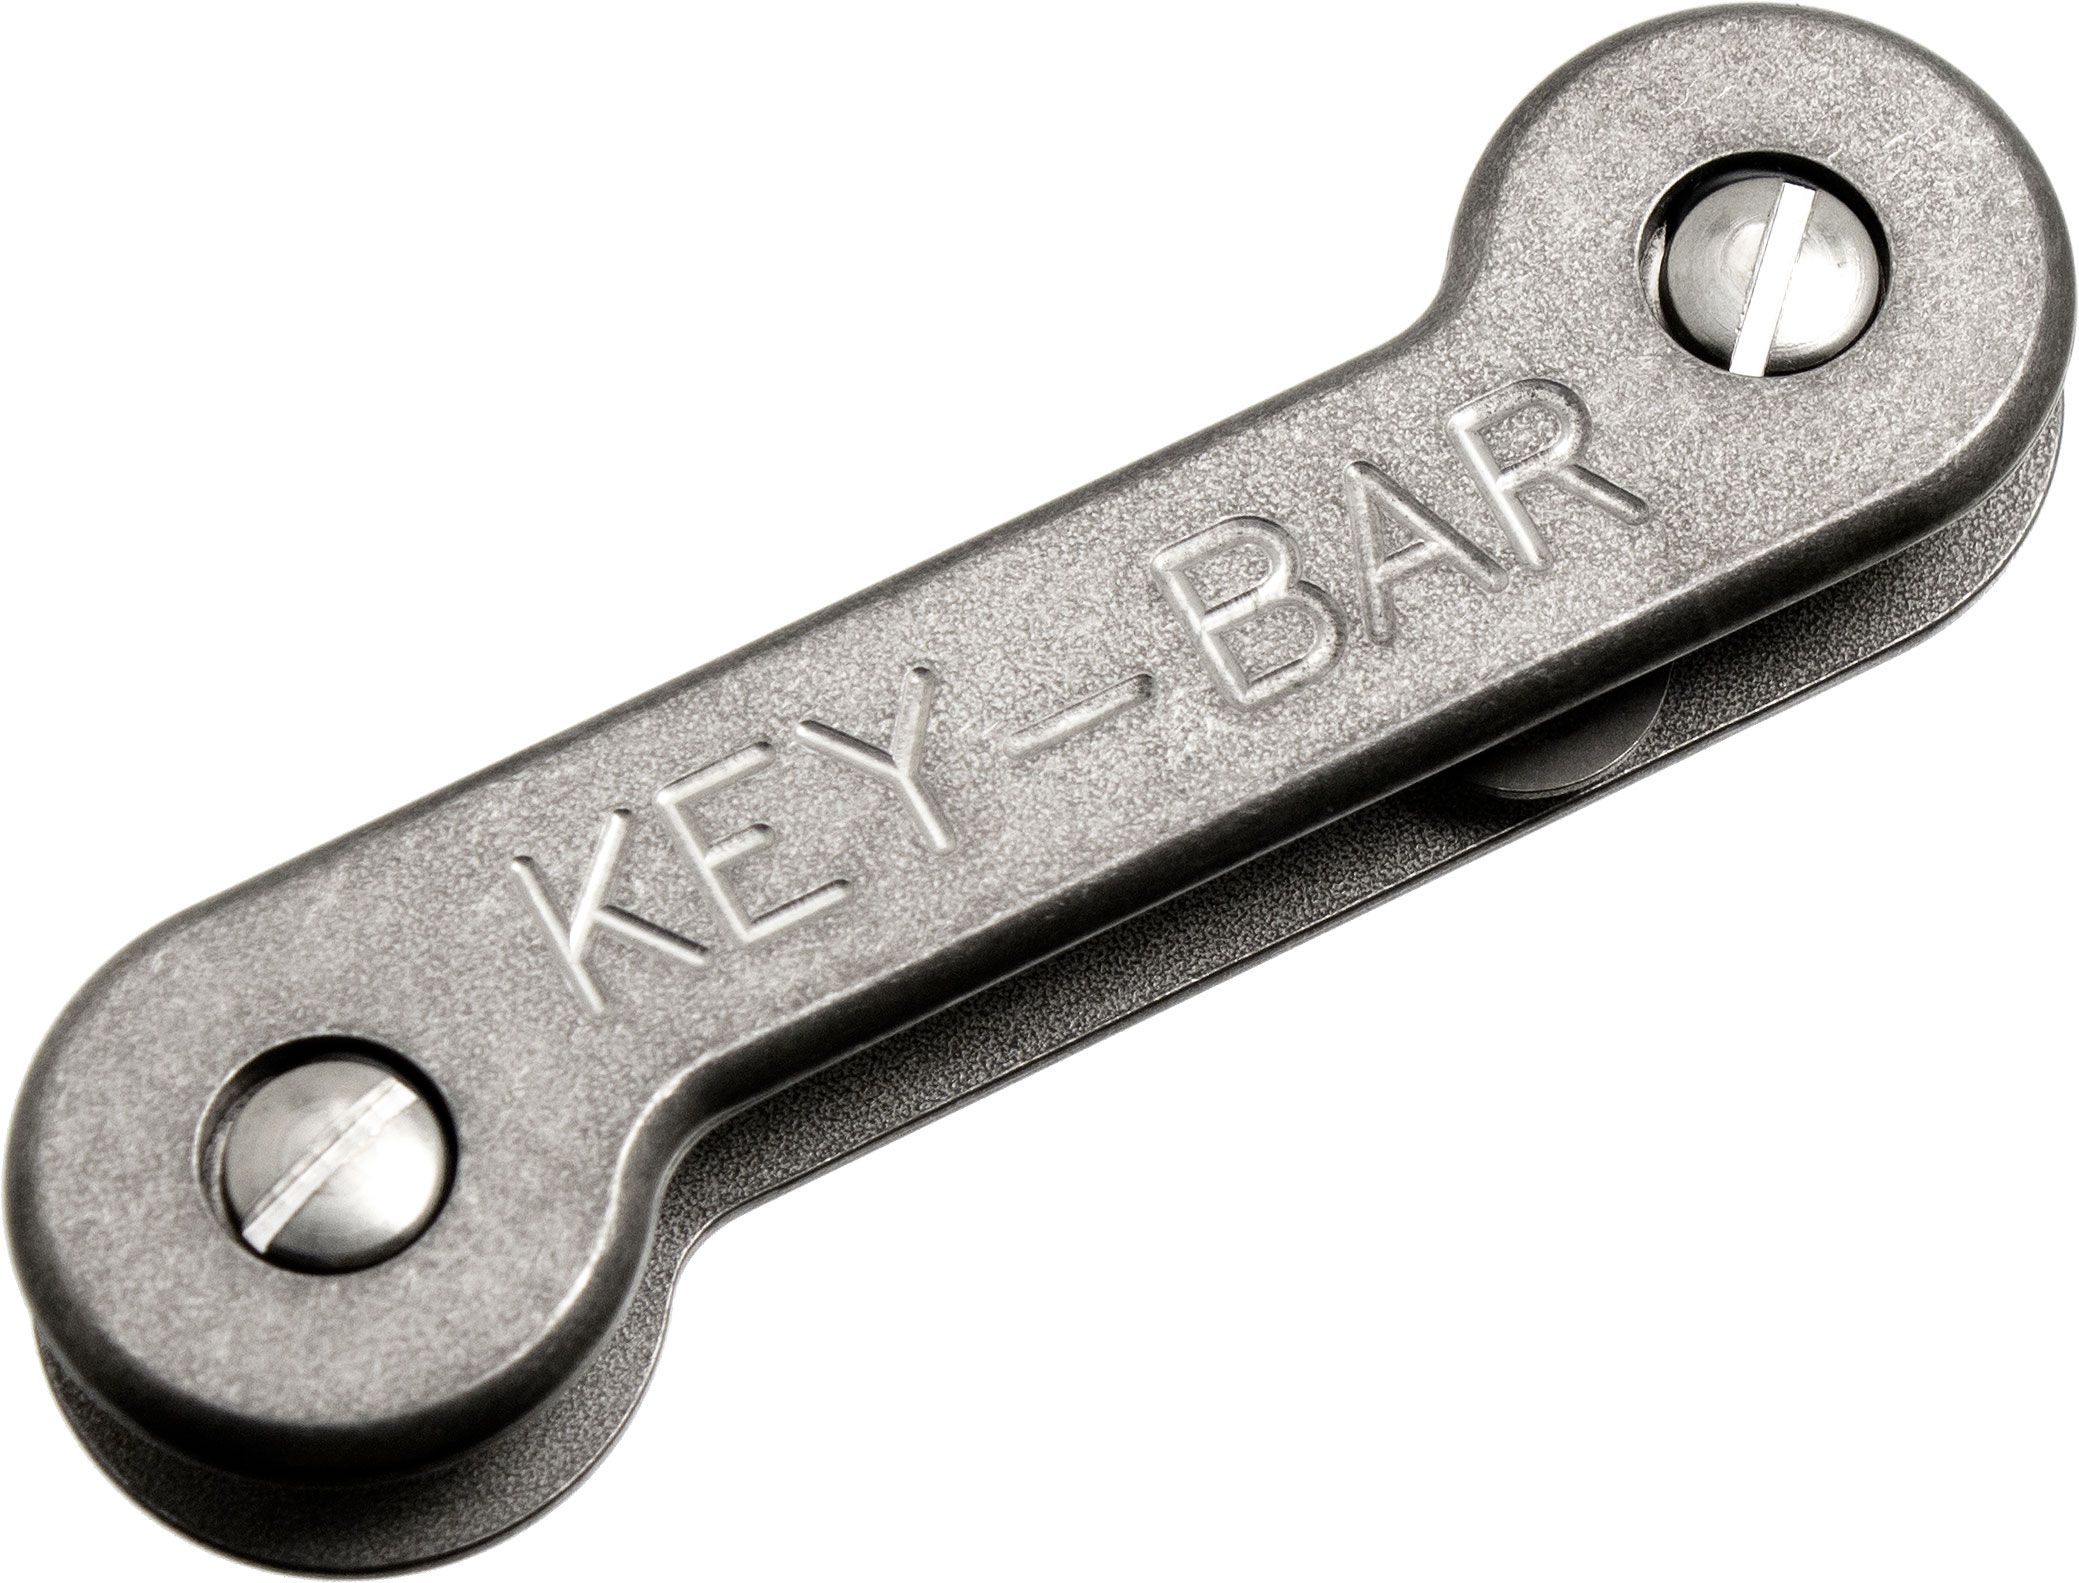 KeyBar Key Organizer Titanium Model with Pocket Clip, Holds up to 12 Keys -  KnifeCenter - TKB - Discontinued